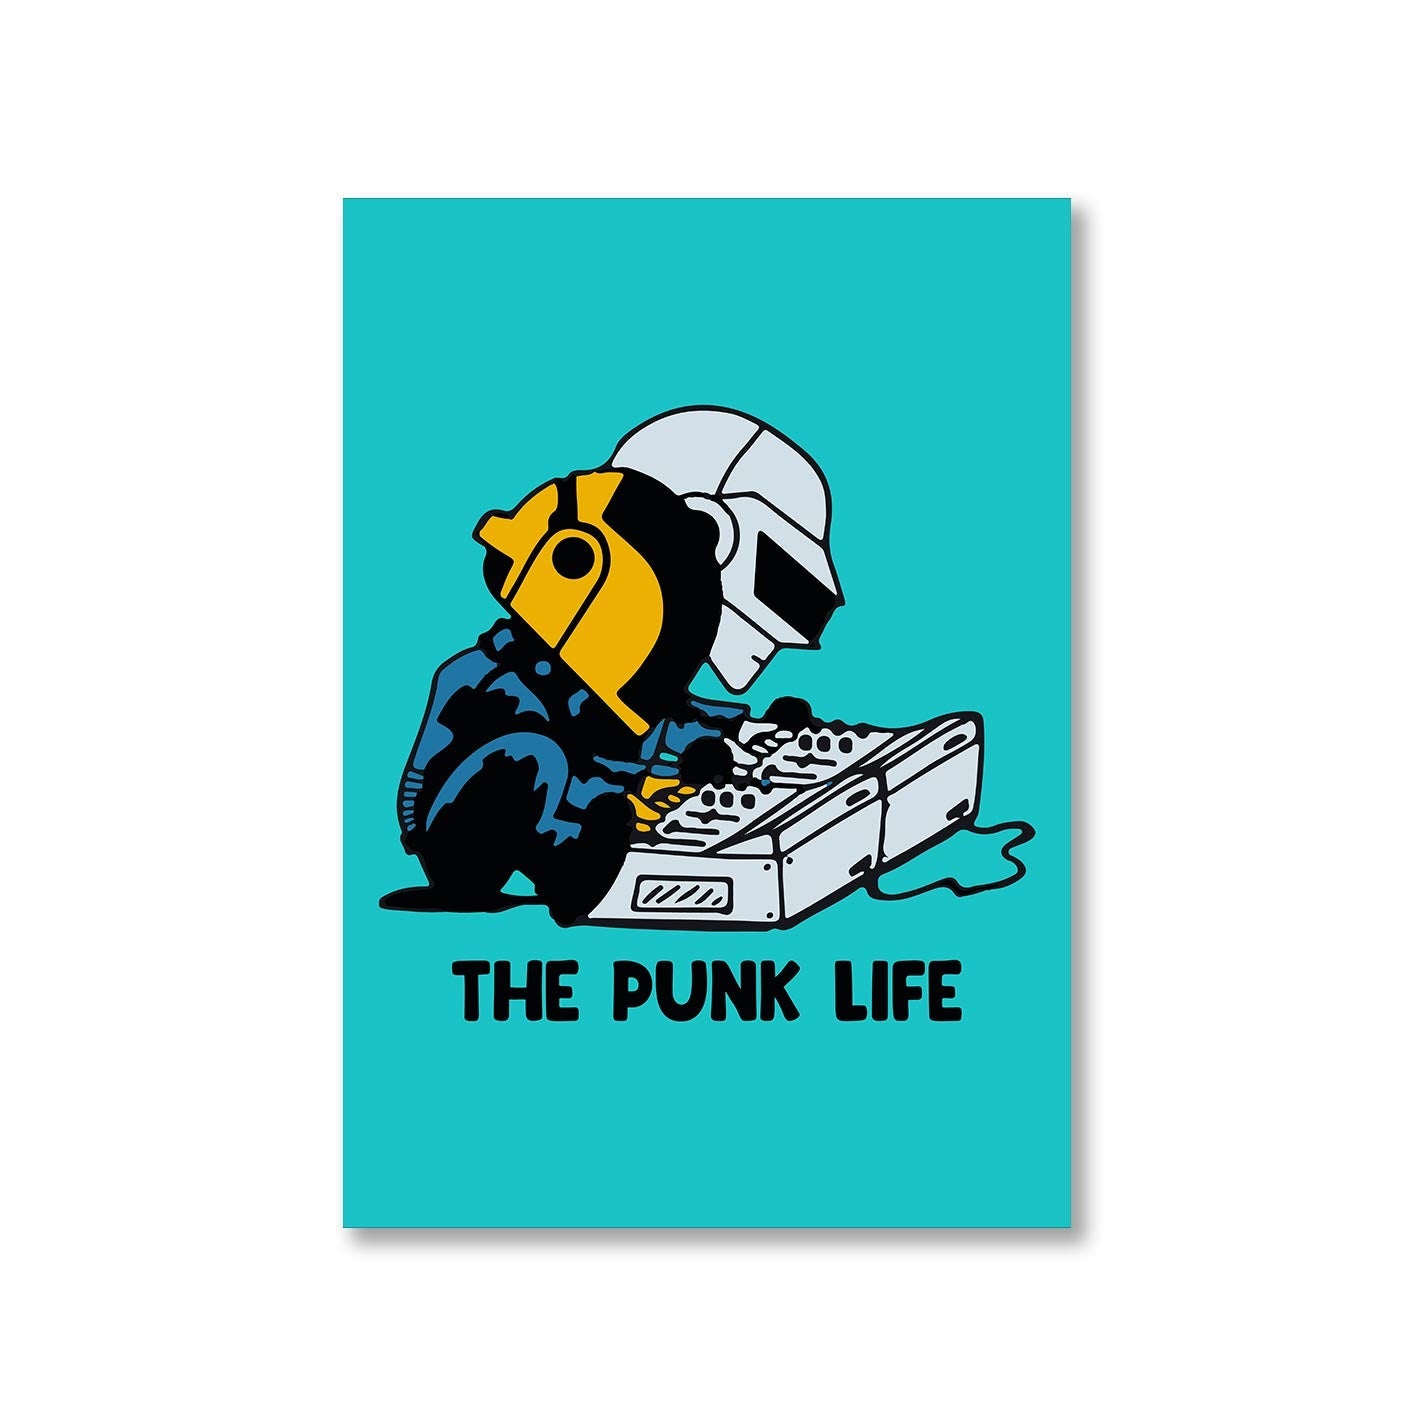 daft punk the punk life poster wall art buy online india the banyan tee tbt a4